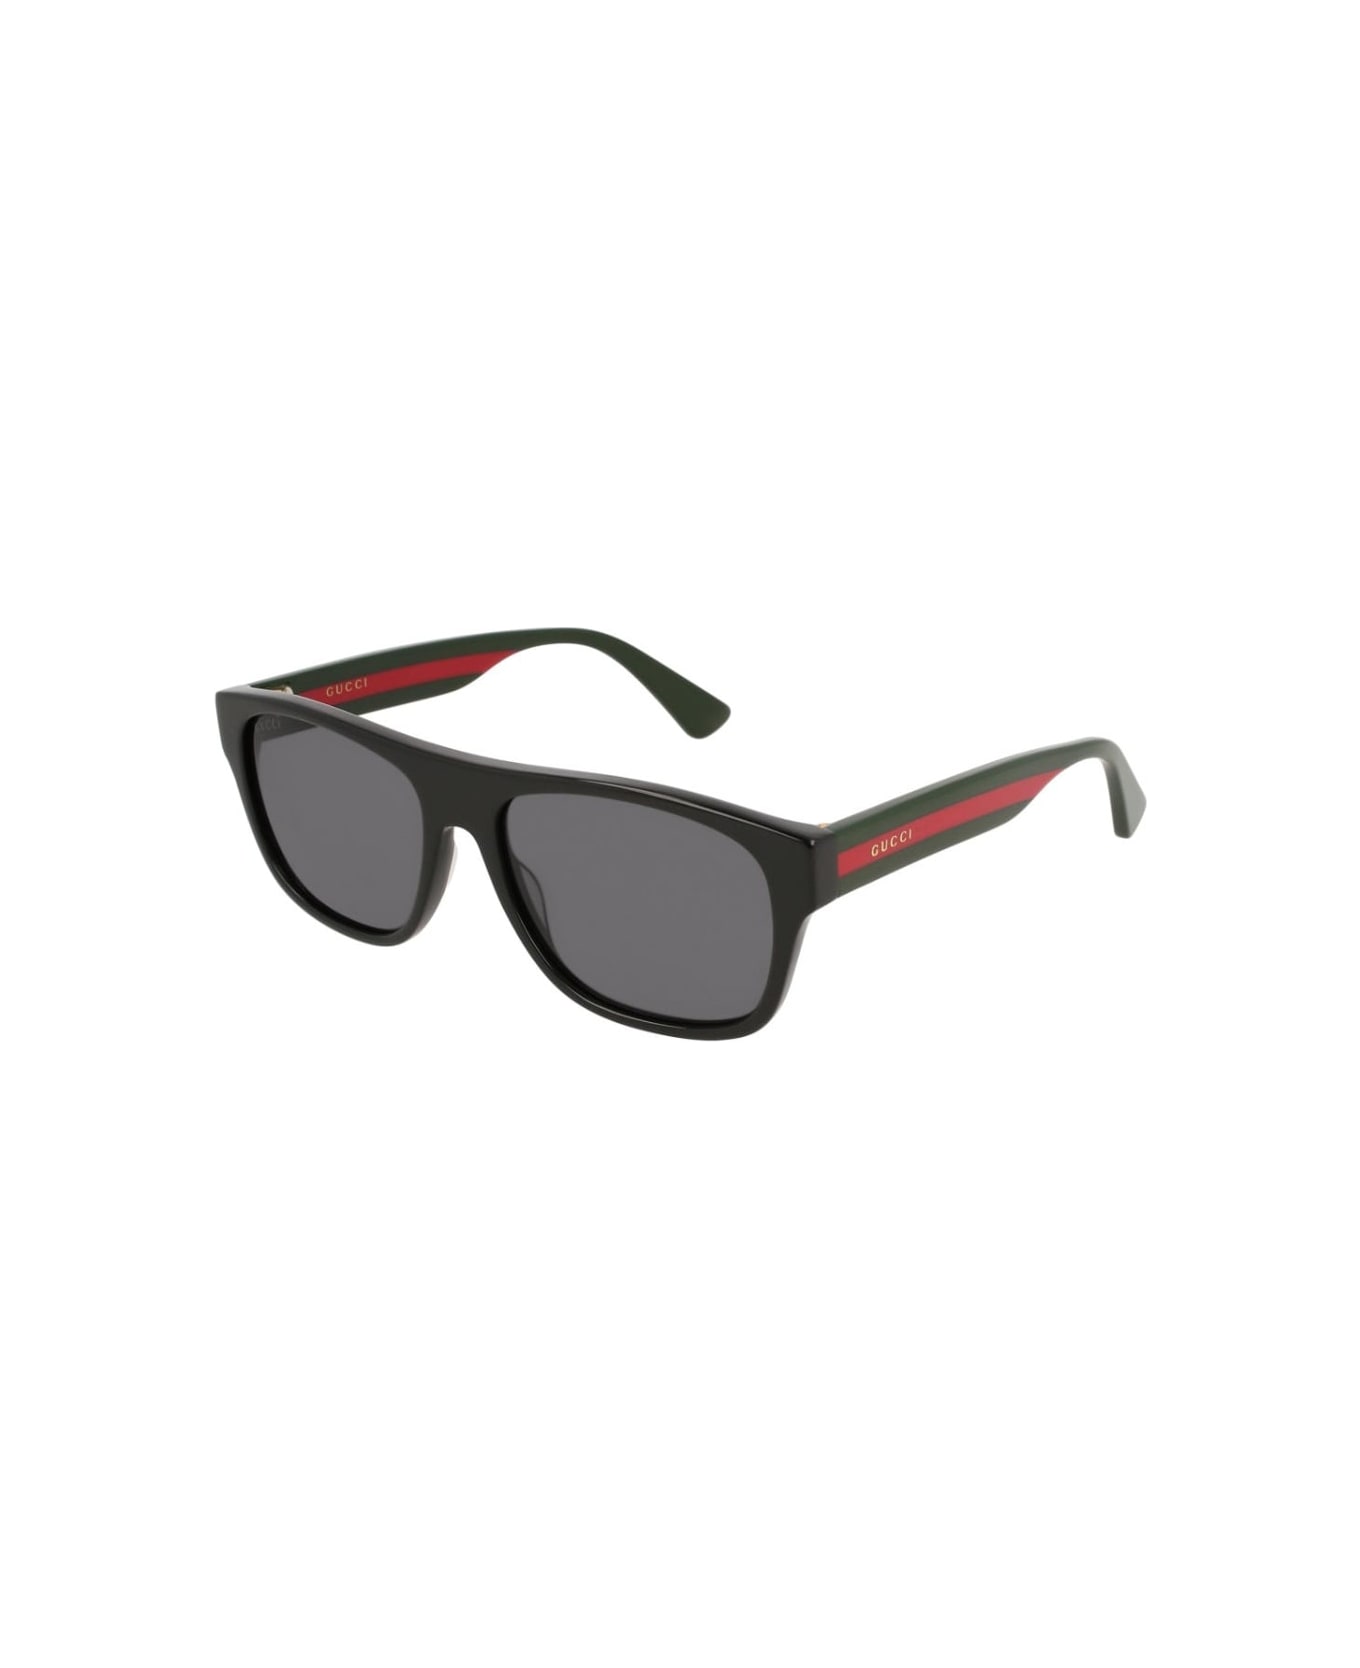 Gucci Eyewear GG0341 002 Sunglasses サングラス